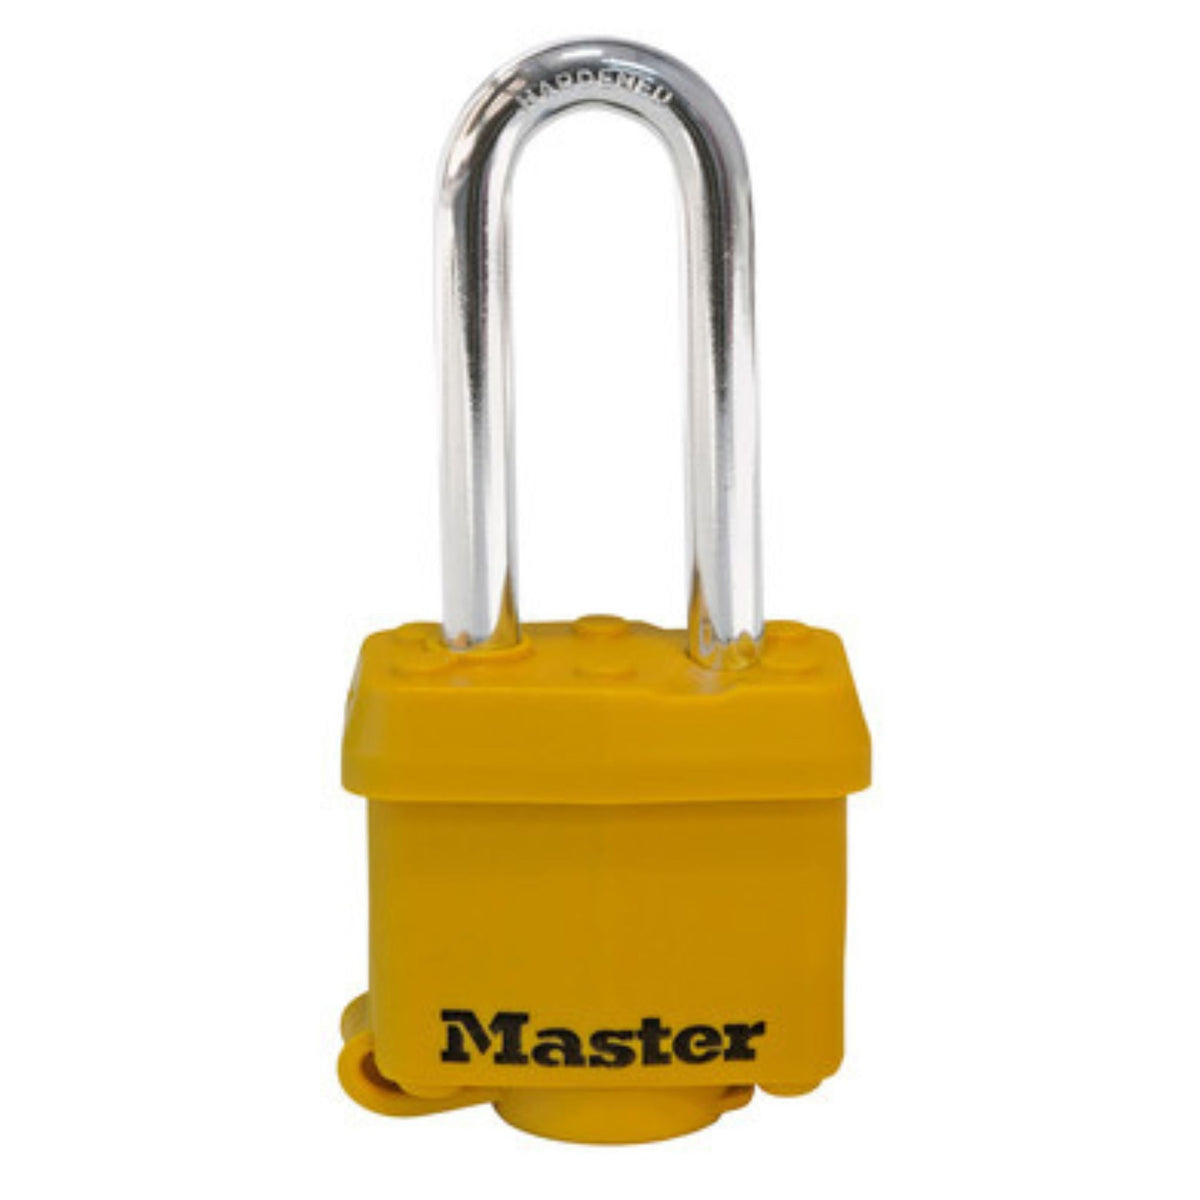 Master Lock 315KALH 3768 Lock Laminated steel No. 315 Series Padlock Keyed to Match Existing Key Number KA3768 - The Lock Source